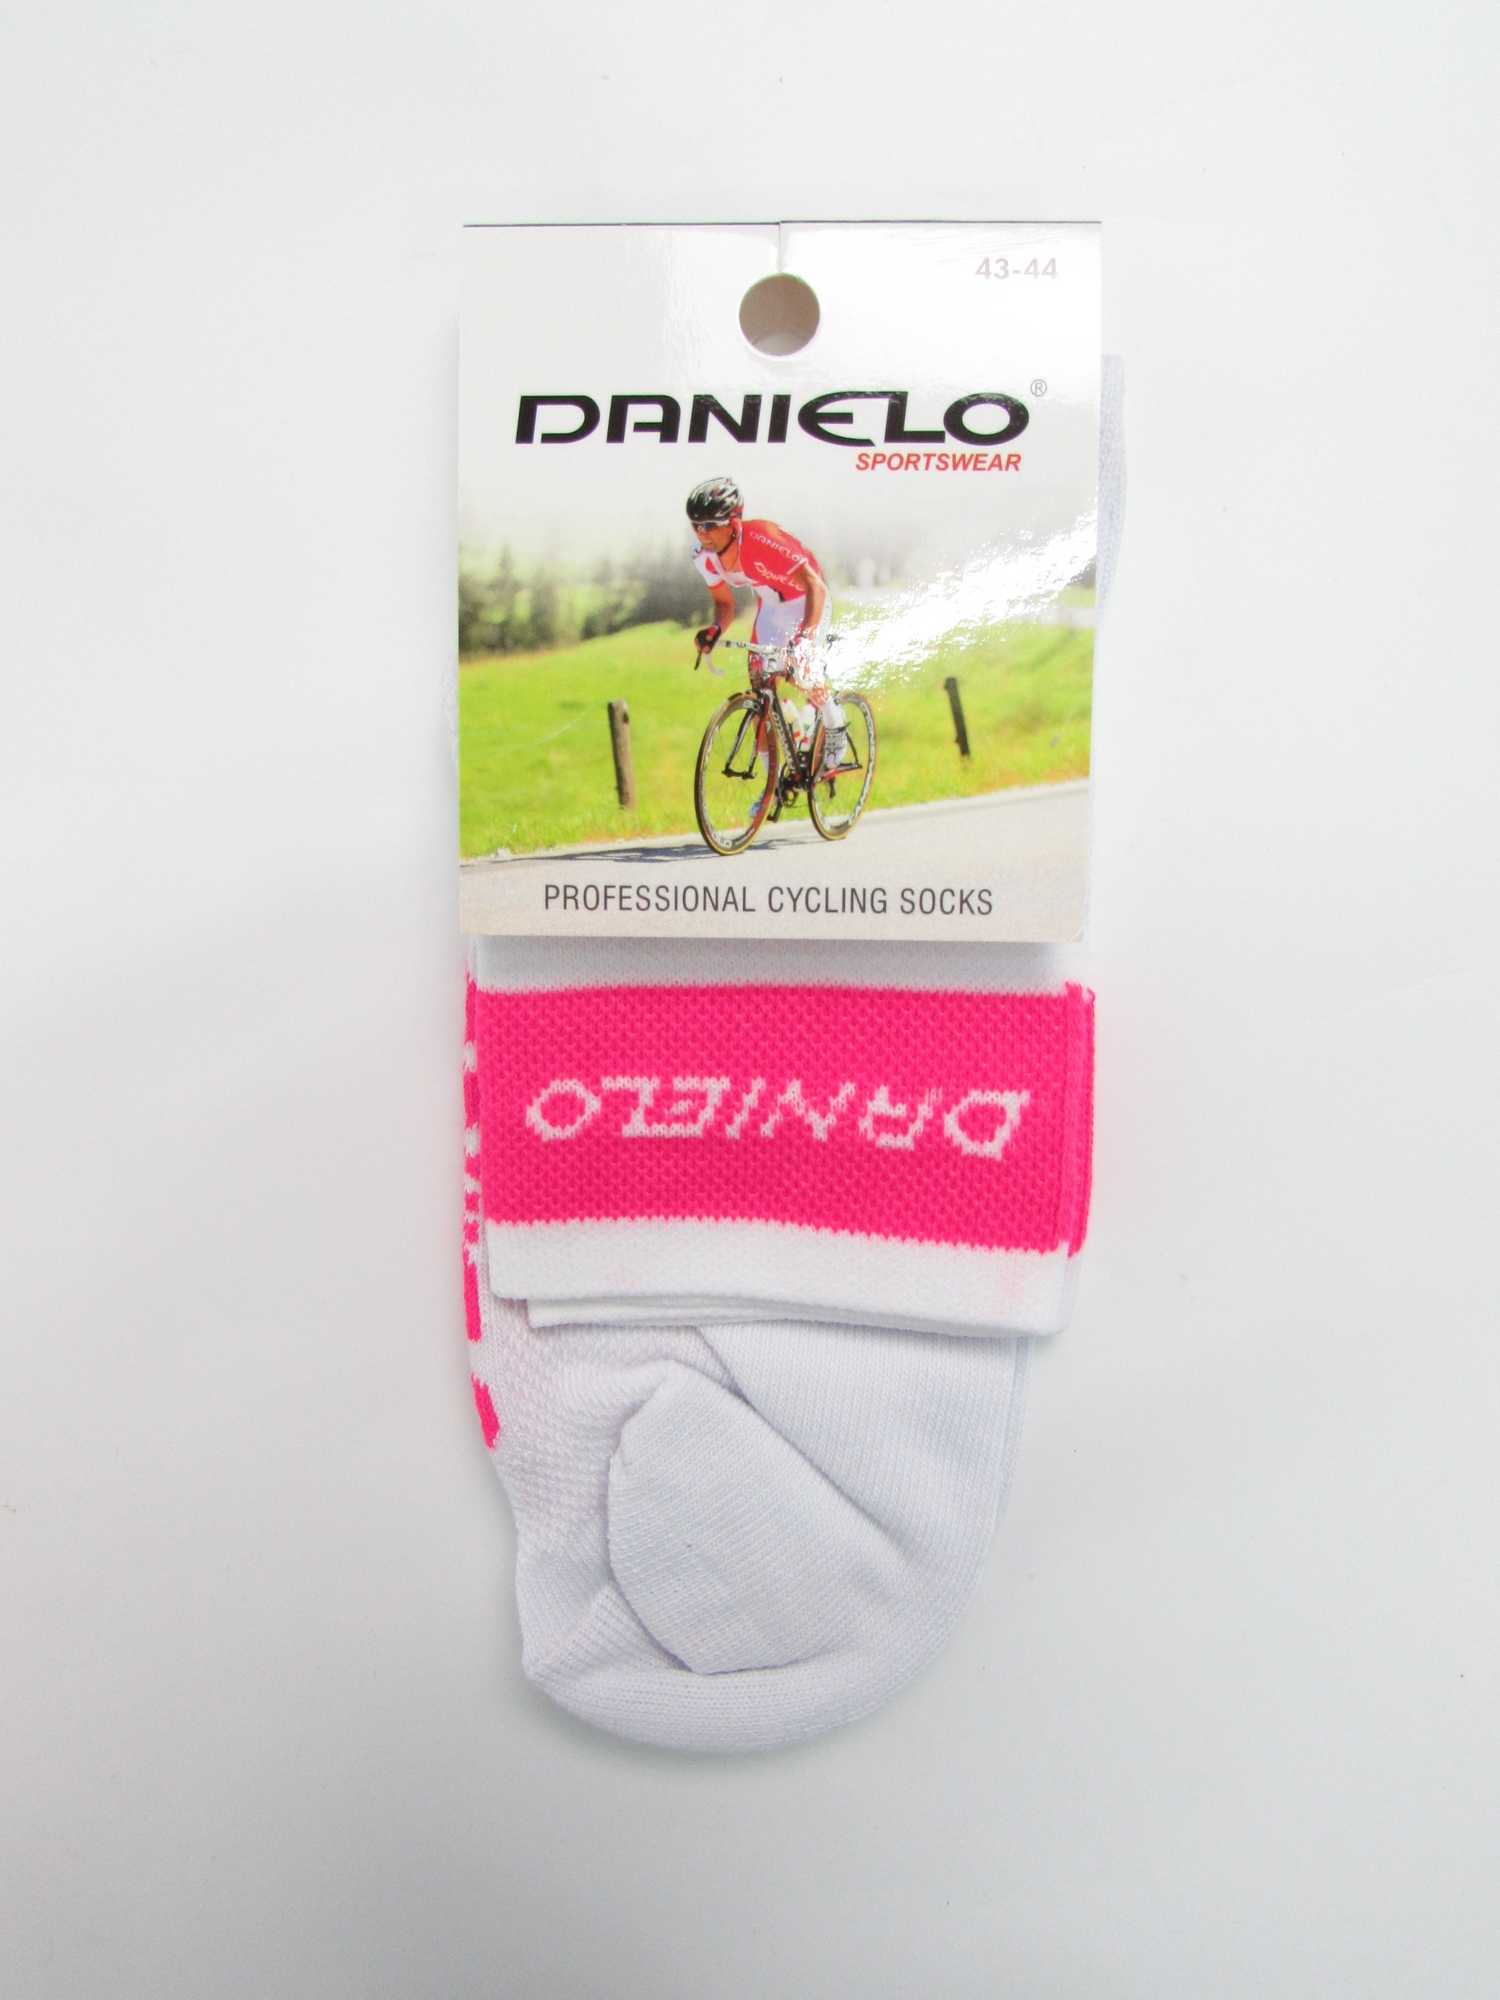 Danielo Professional Cycling Socks white/pink size 43-44 (L)